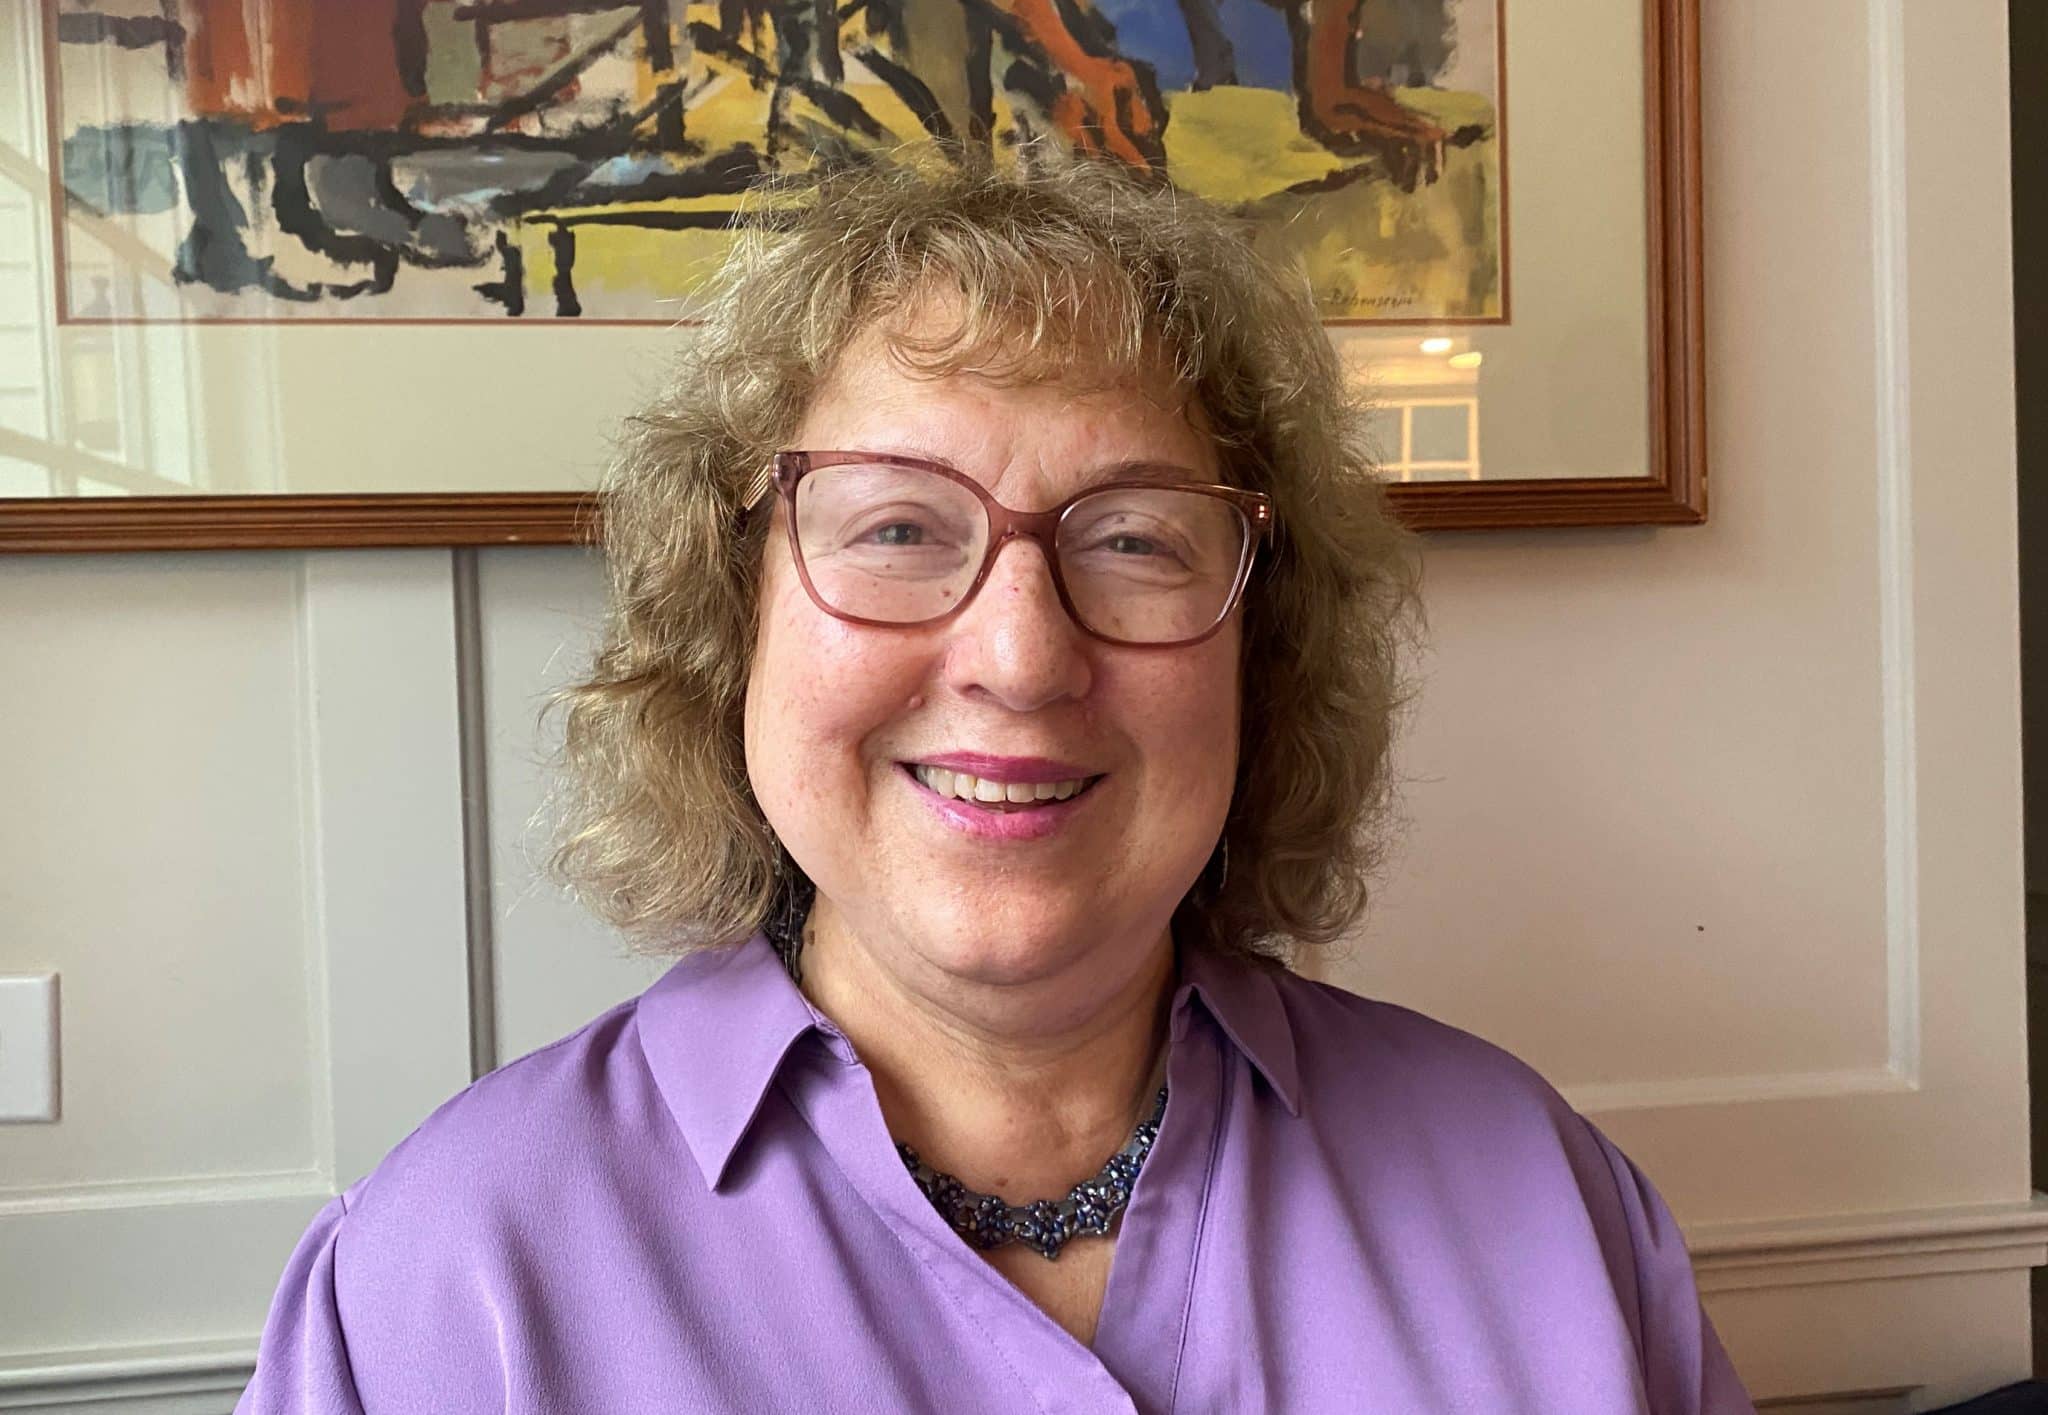 Nancy Miringoff ALS Greater New York Board member